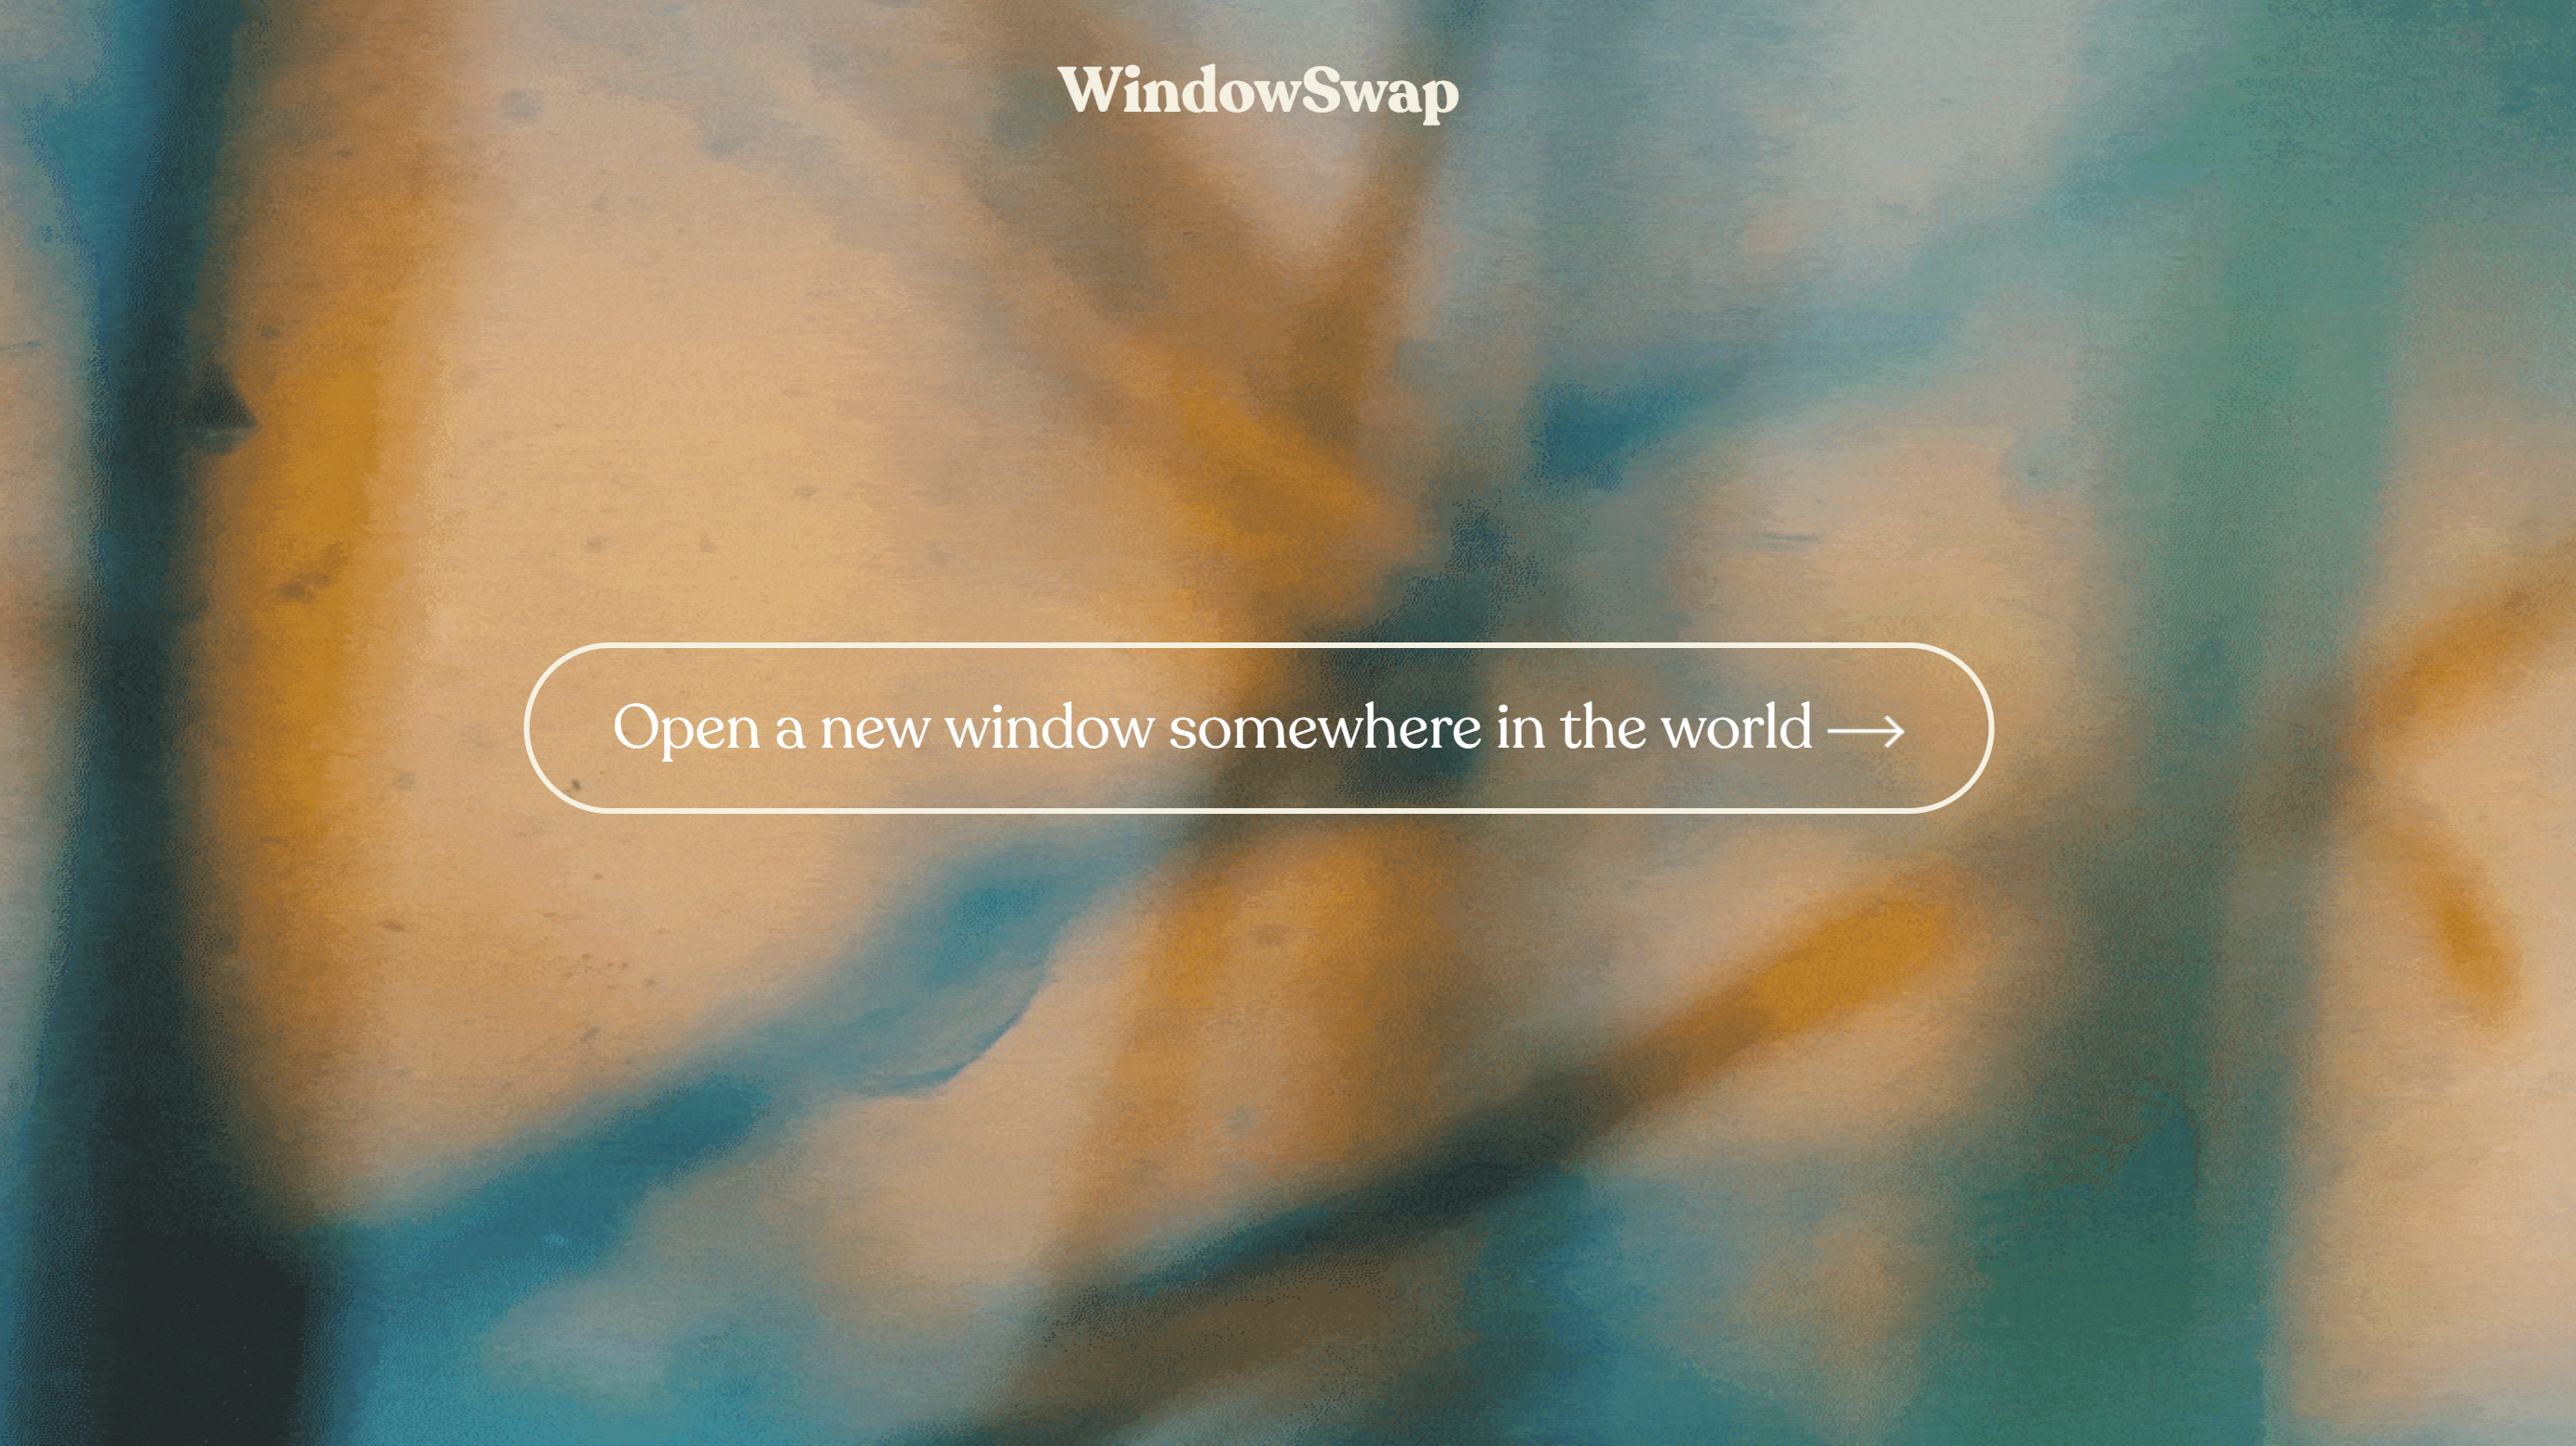 WindowSwap Homepage